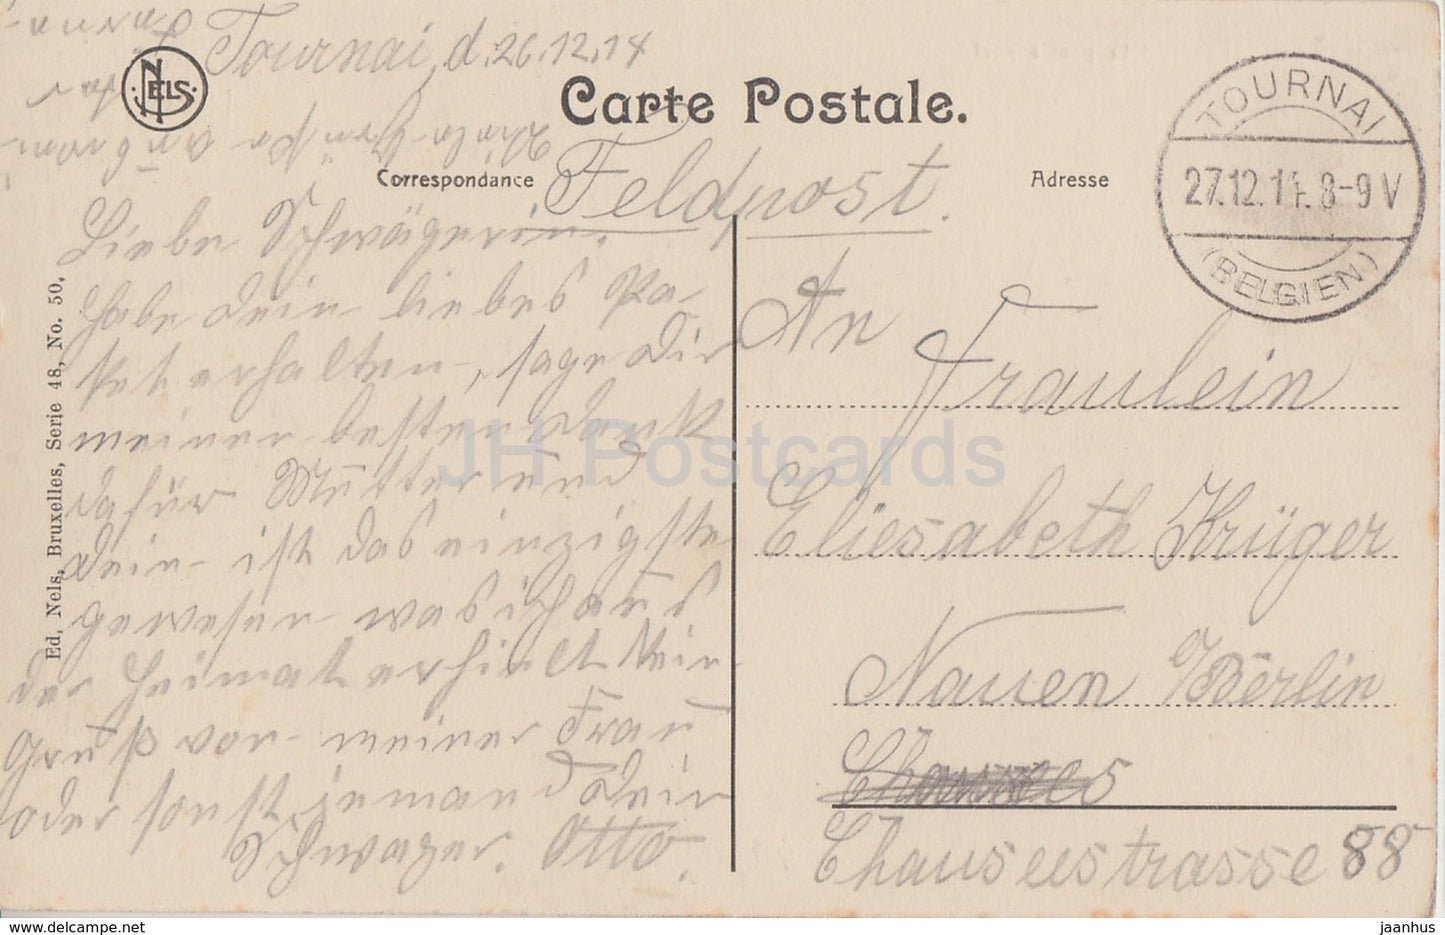 Tournai - Le Pont a Pont - Brücke - Feldpost - alte Postkarte - 1914 - Belgien - gebraucht